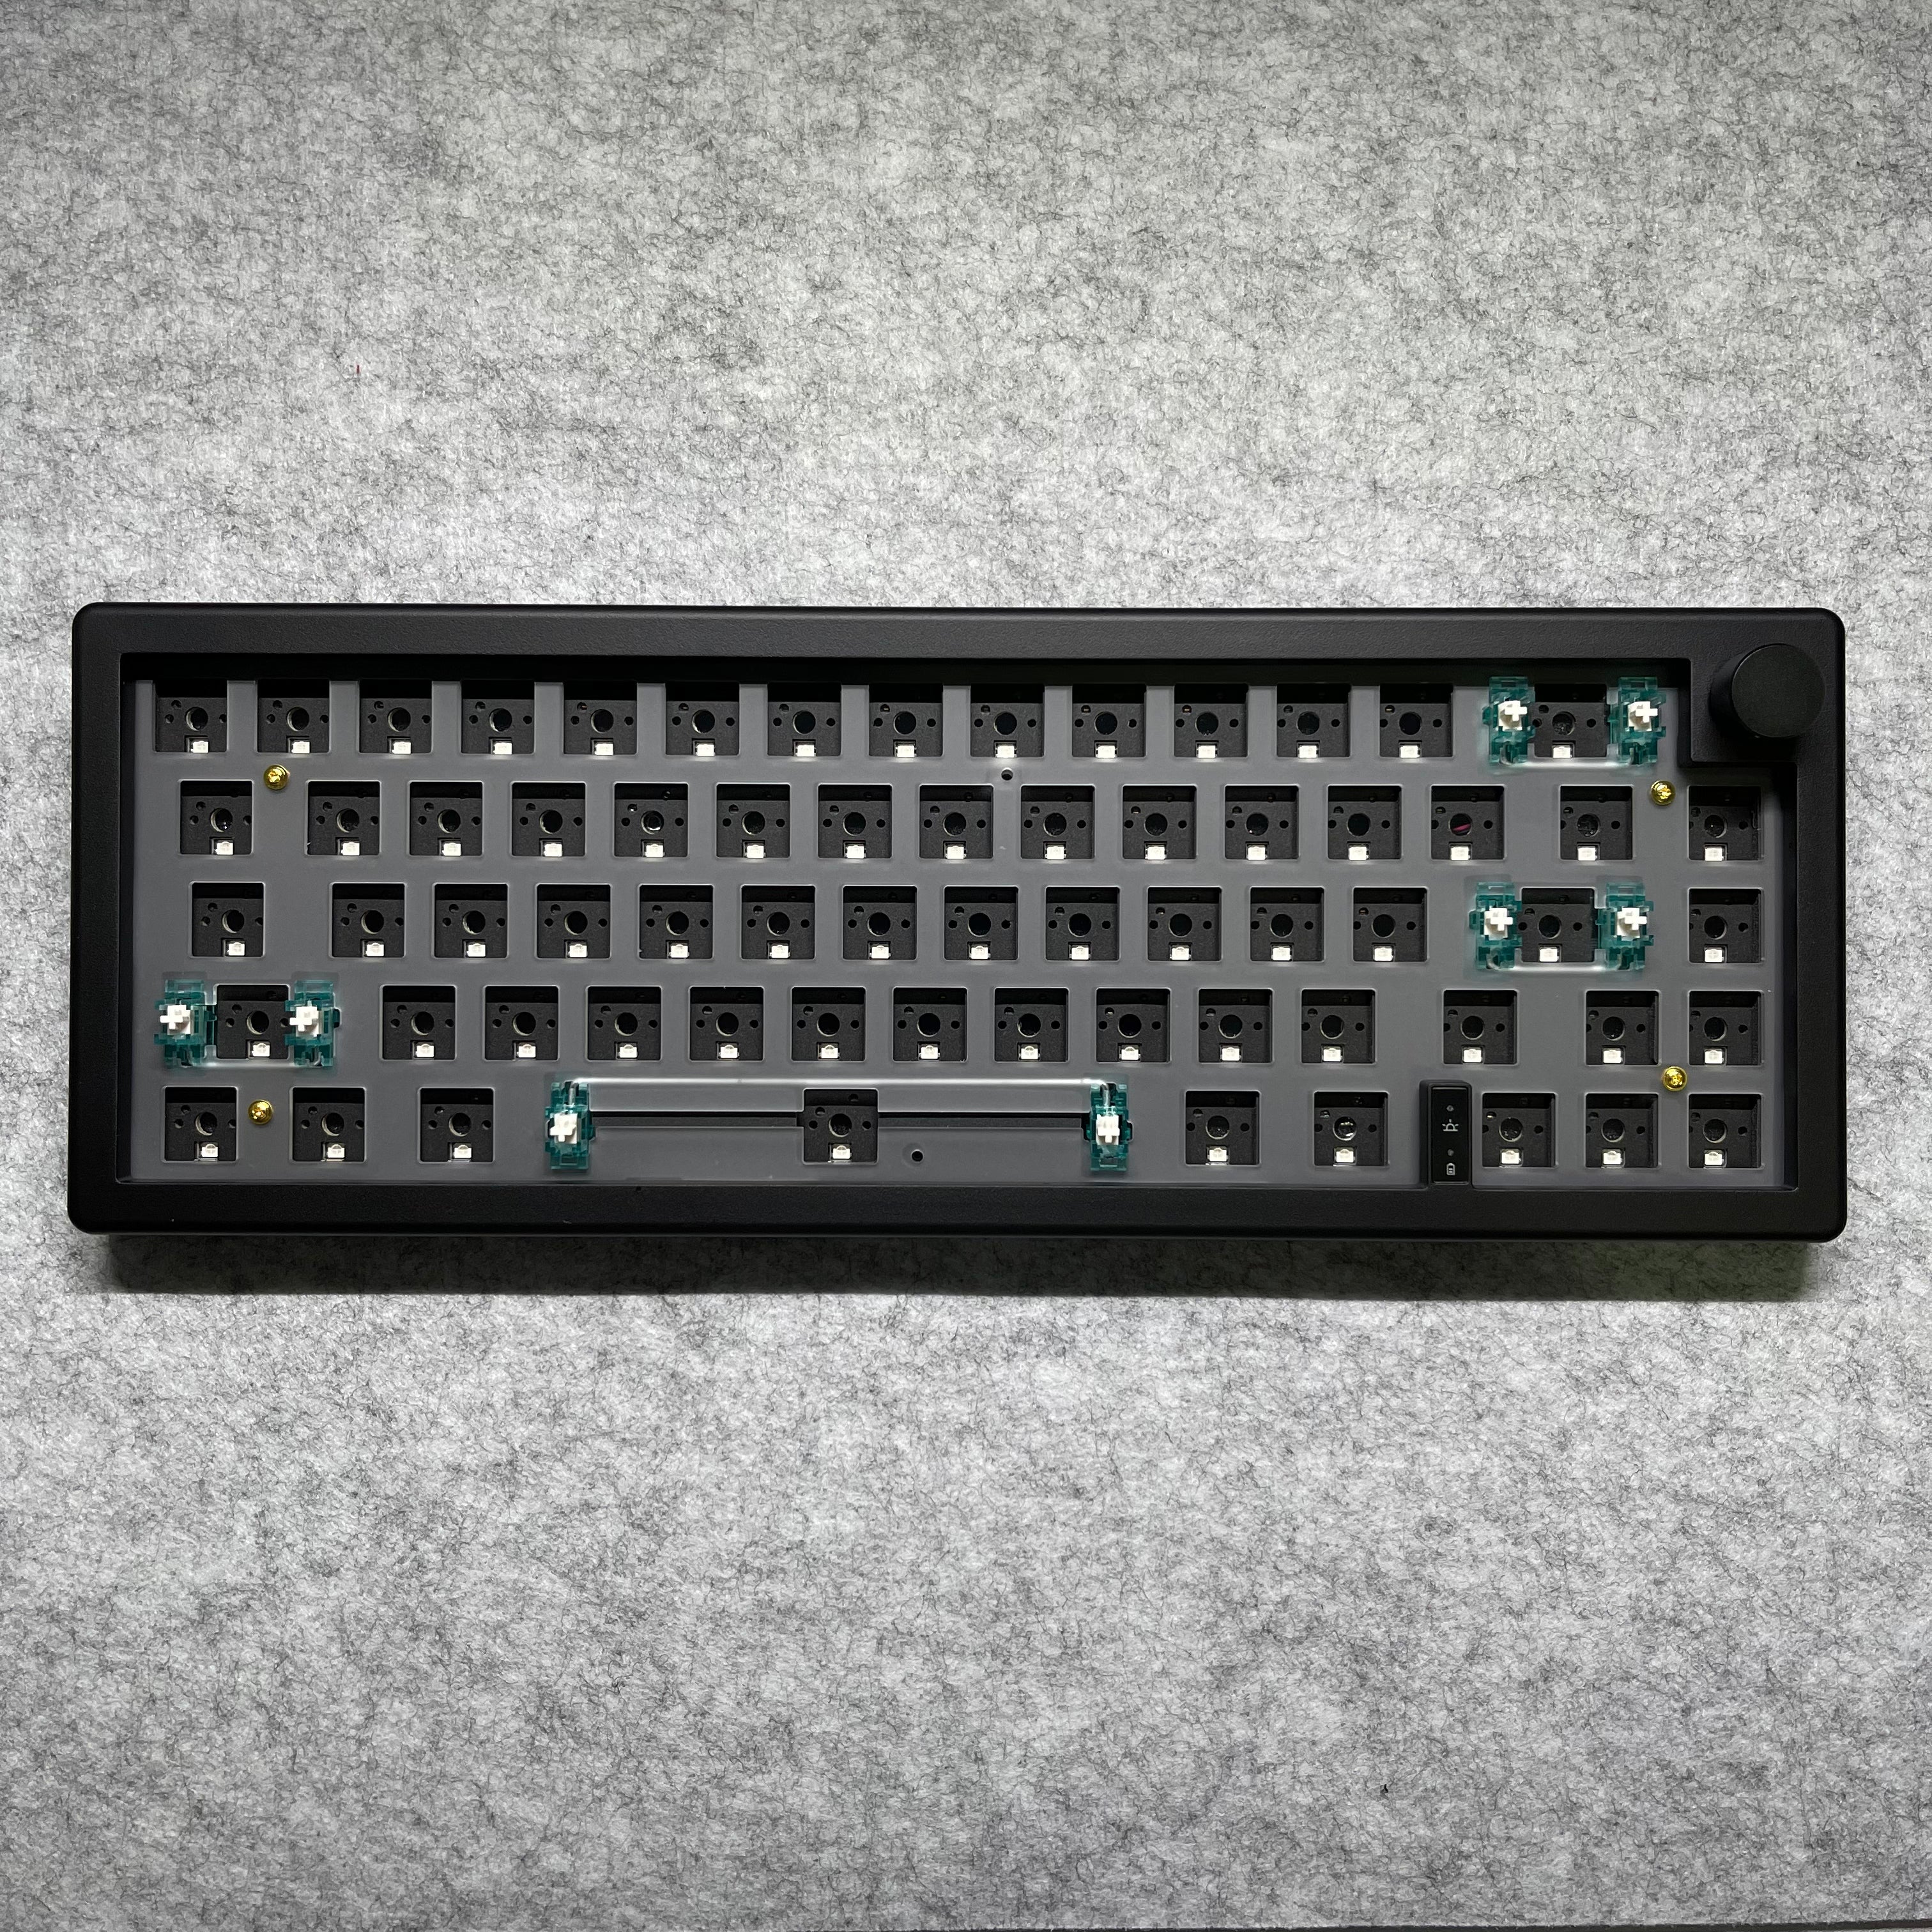 GMK67 Mechanical Keyboard Kit